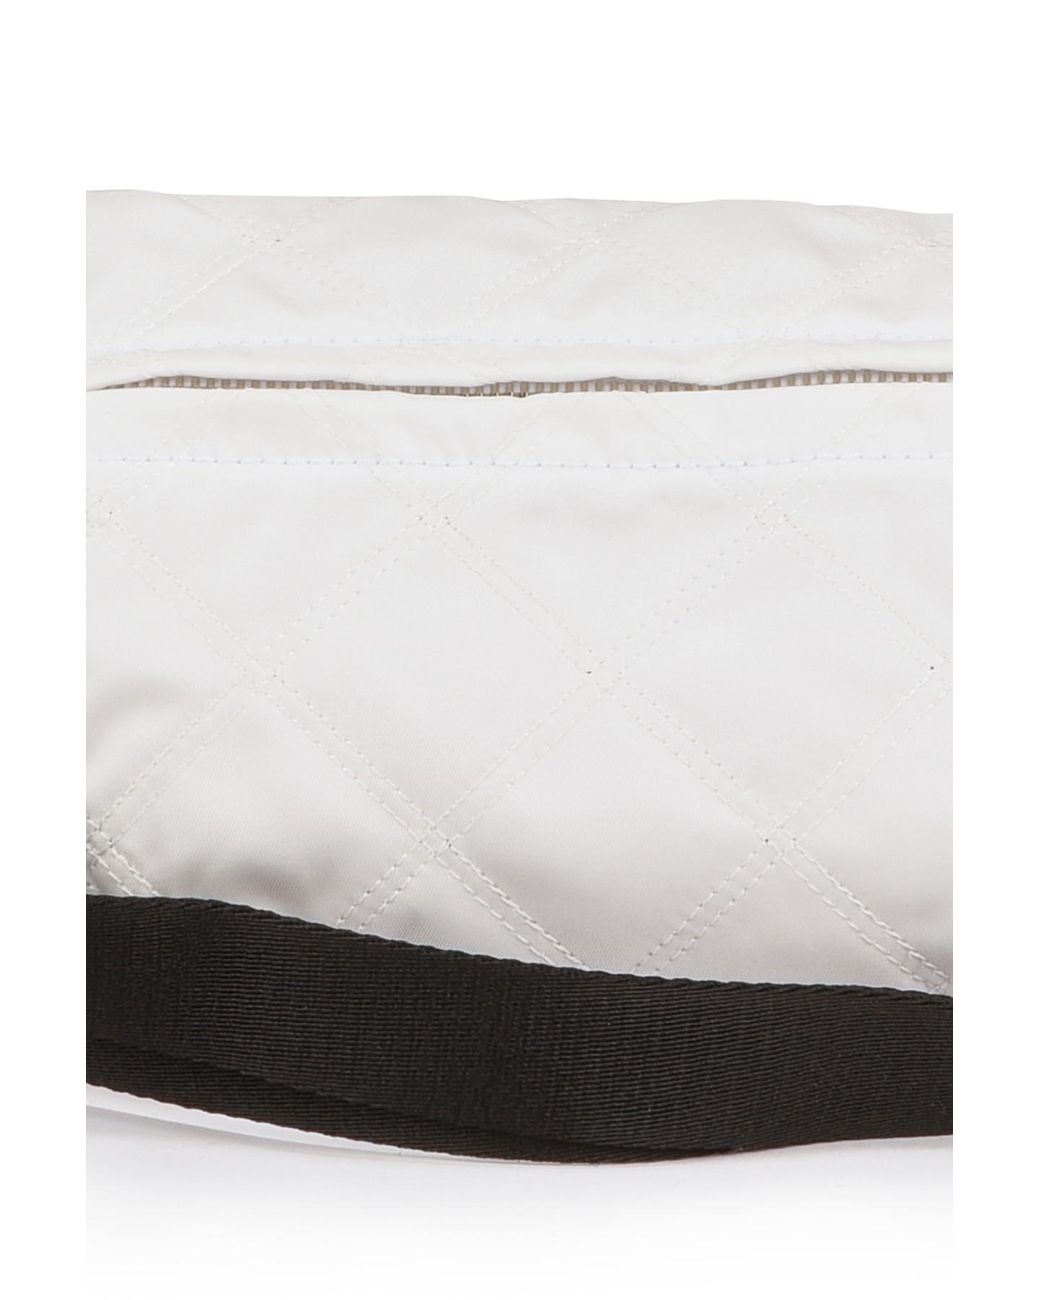 Shop MONCLER Felicie Belt Bag (I109B5M00001M2947999) by viaconiglio